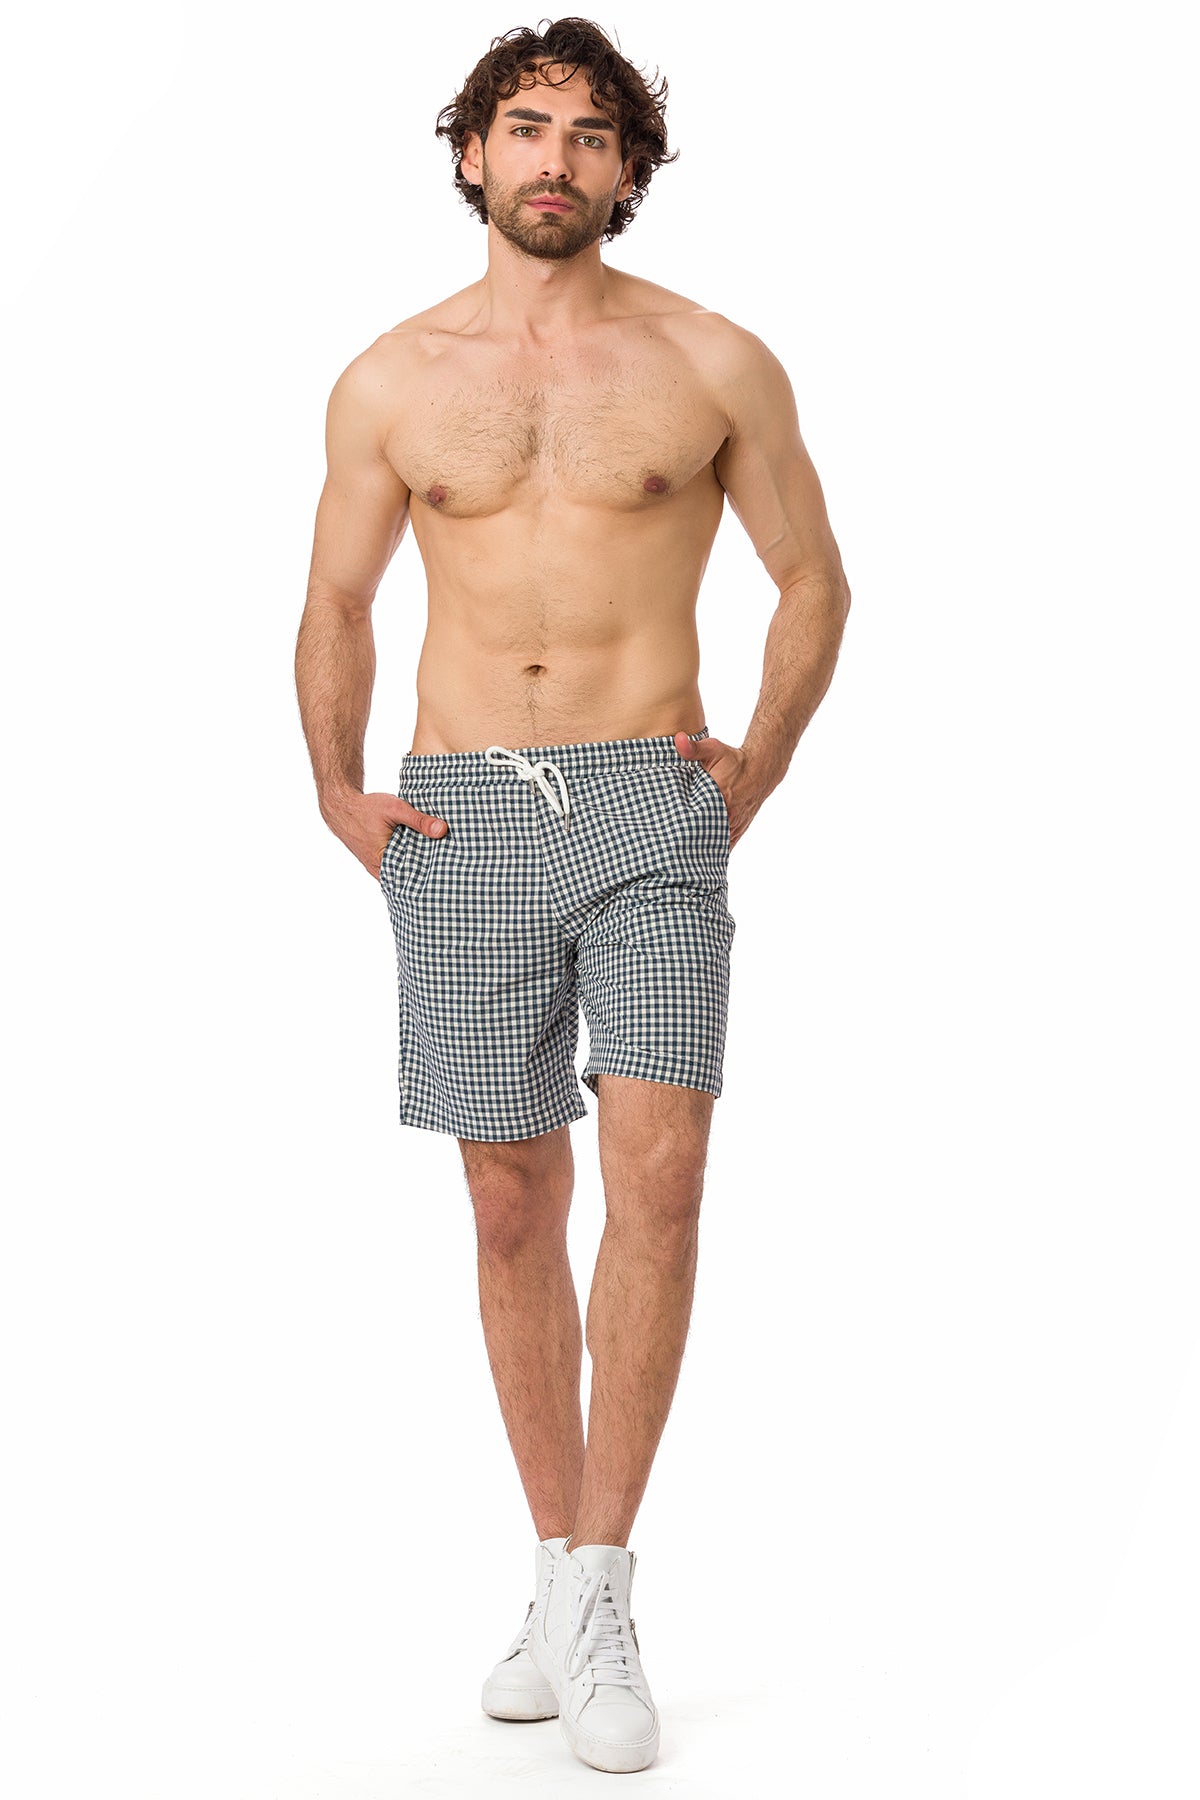 Suvi NYC Men's Checkered Pattern Shorts. Bermuda Casual Summer Cotton